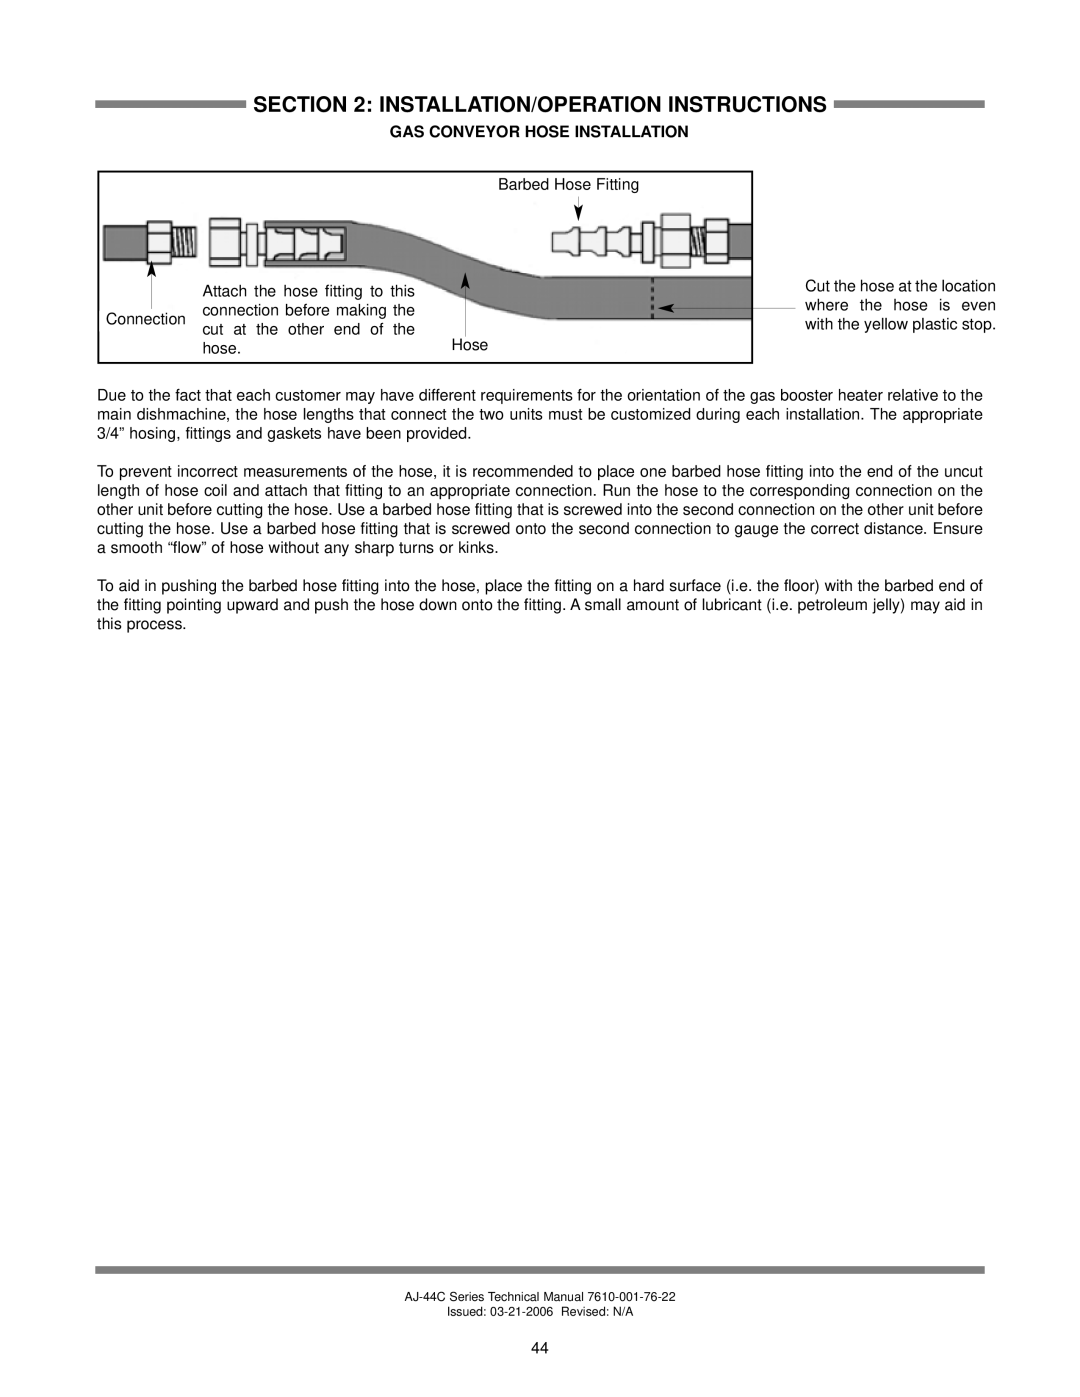 Jackson AJ-44 technical manual Installation/Operation Instructions, Gas Conveyor Hose Installation 